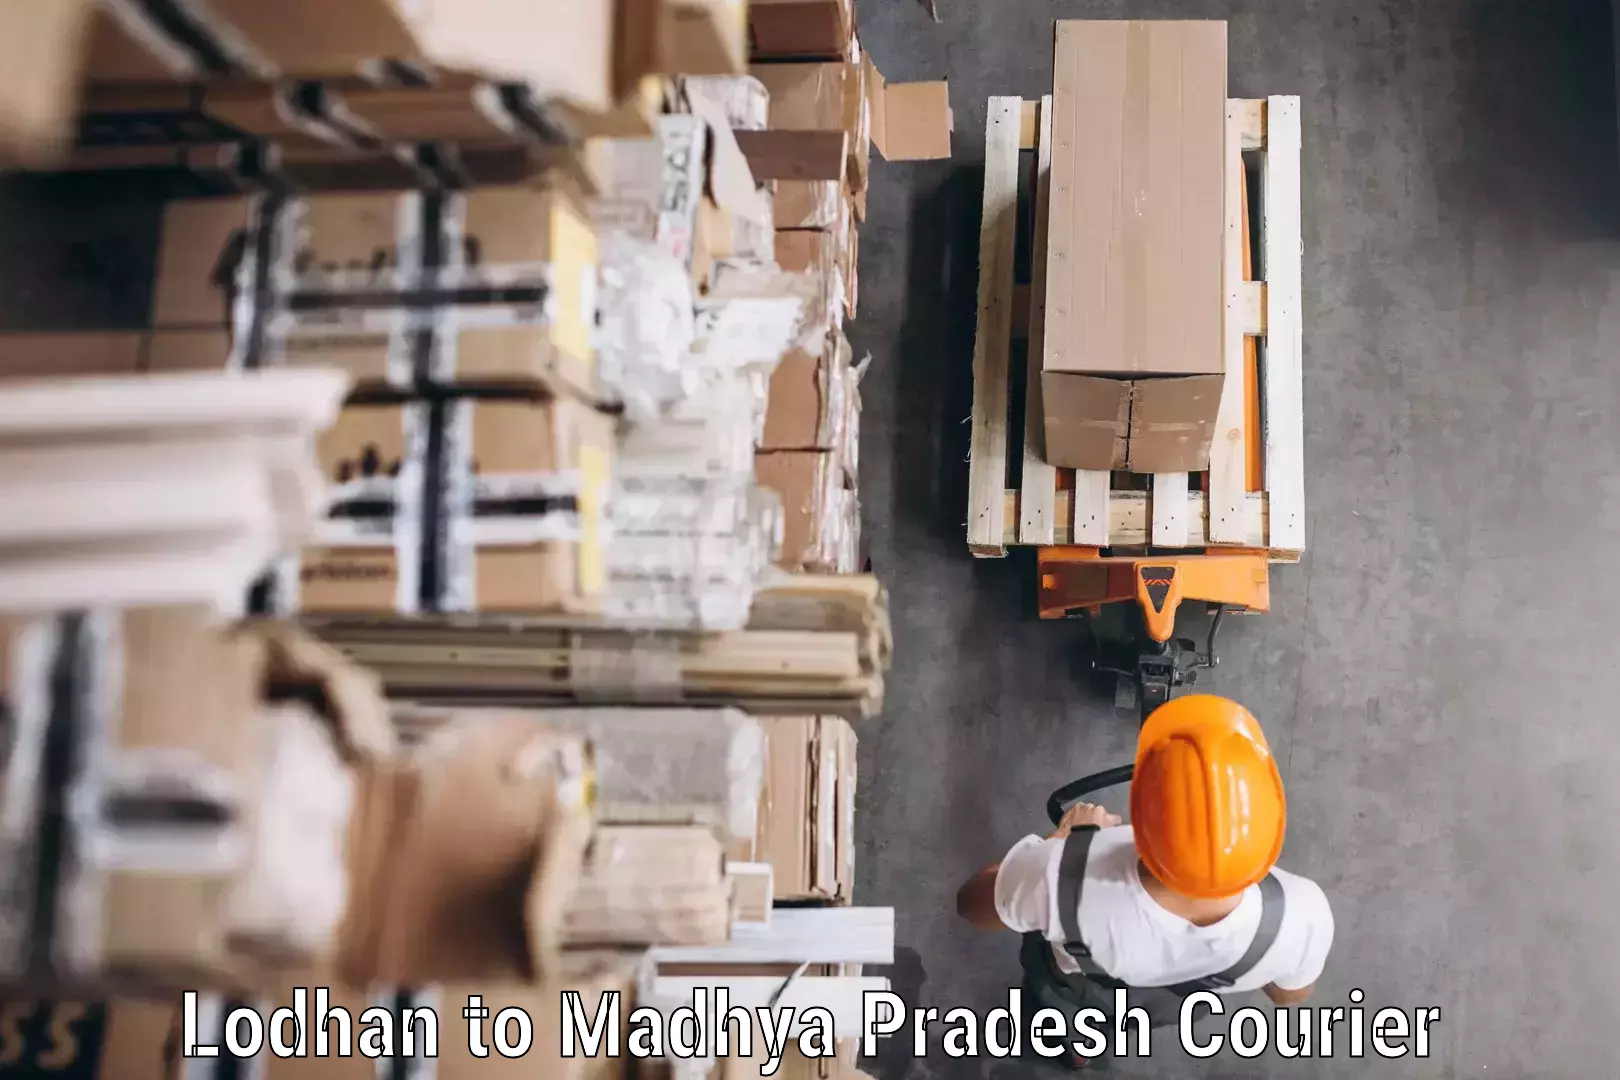 User-friendly delivery service Lodhan to Madhya Pradesh